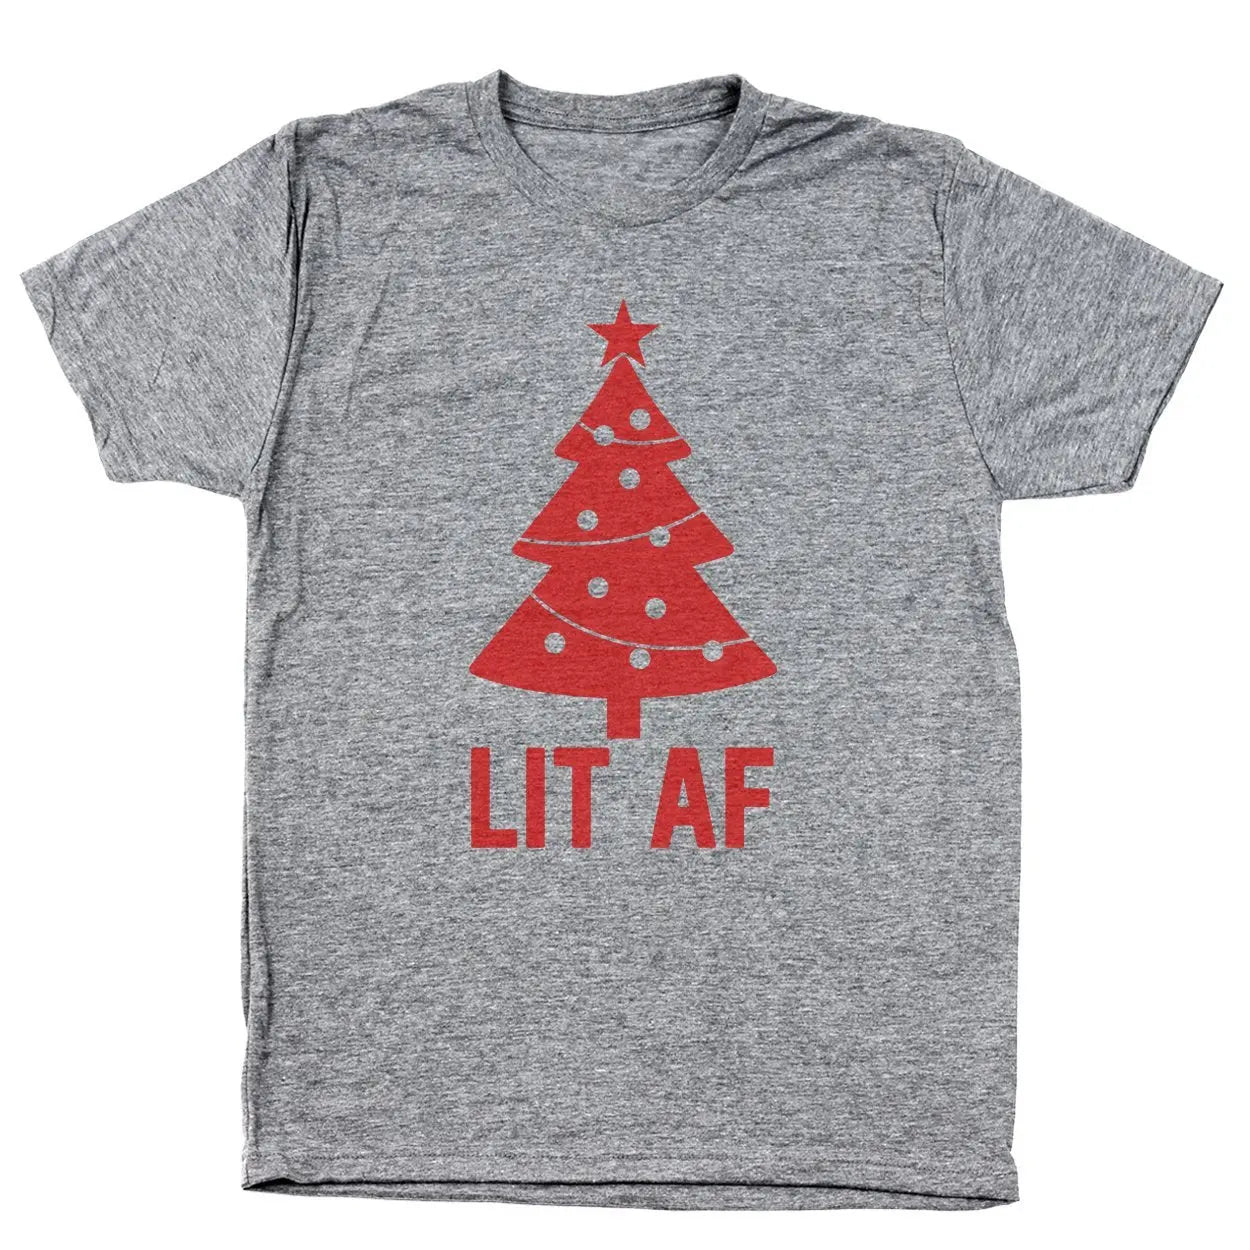 Lit AF Tshirt - Donkey Tees